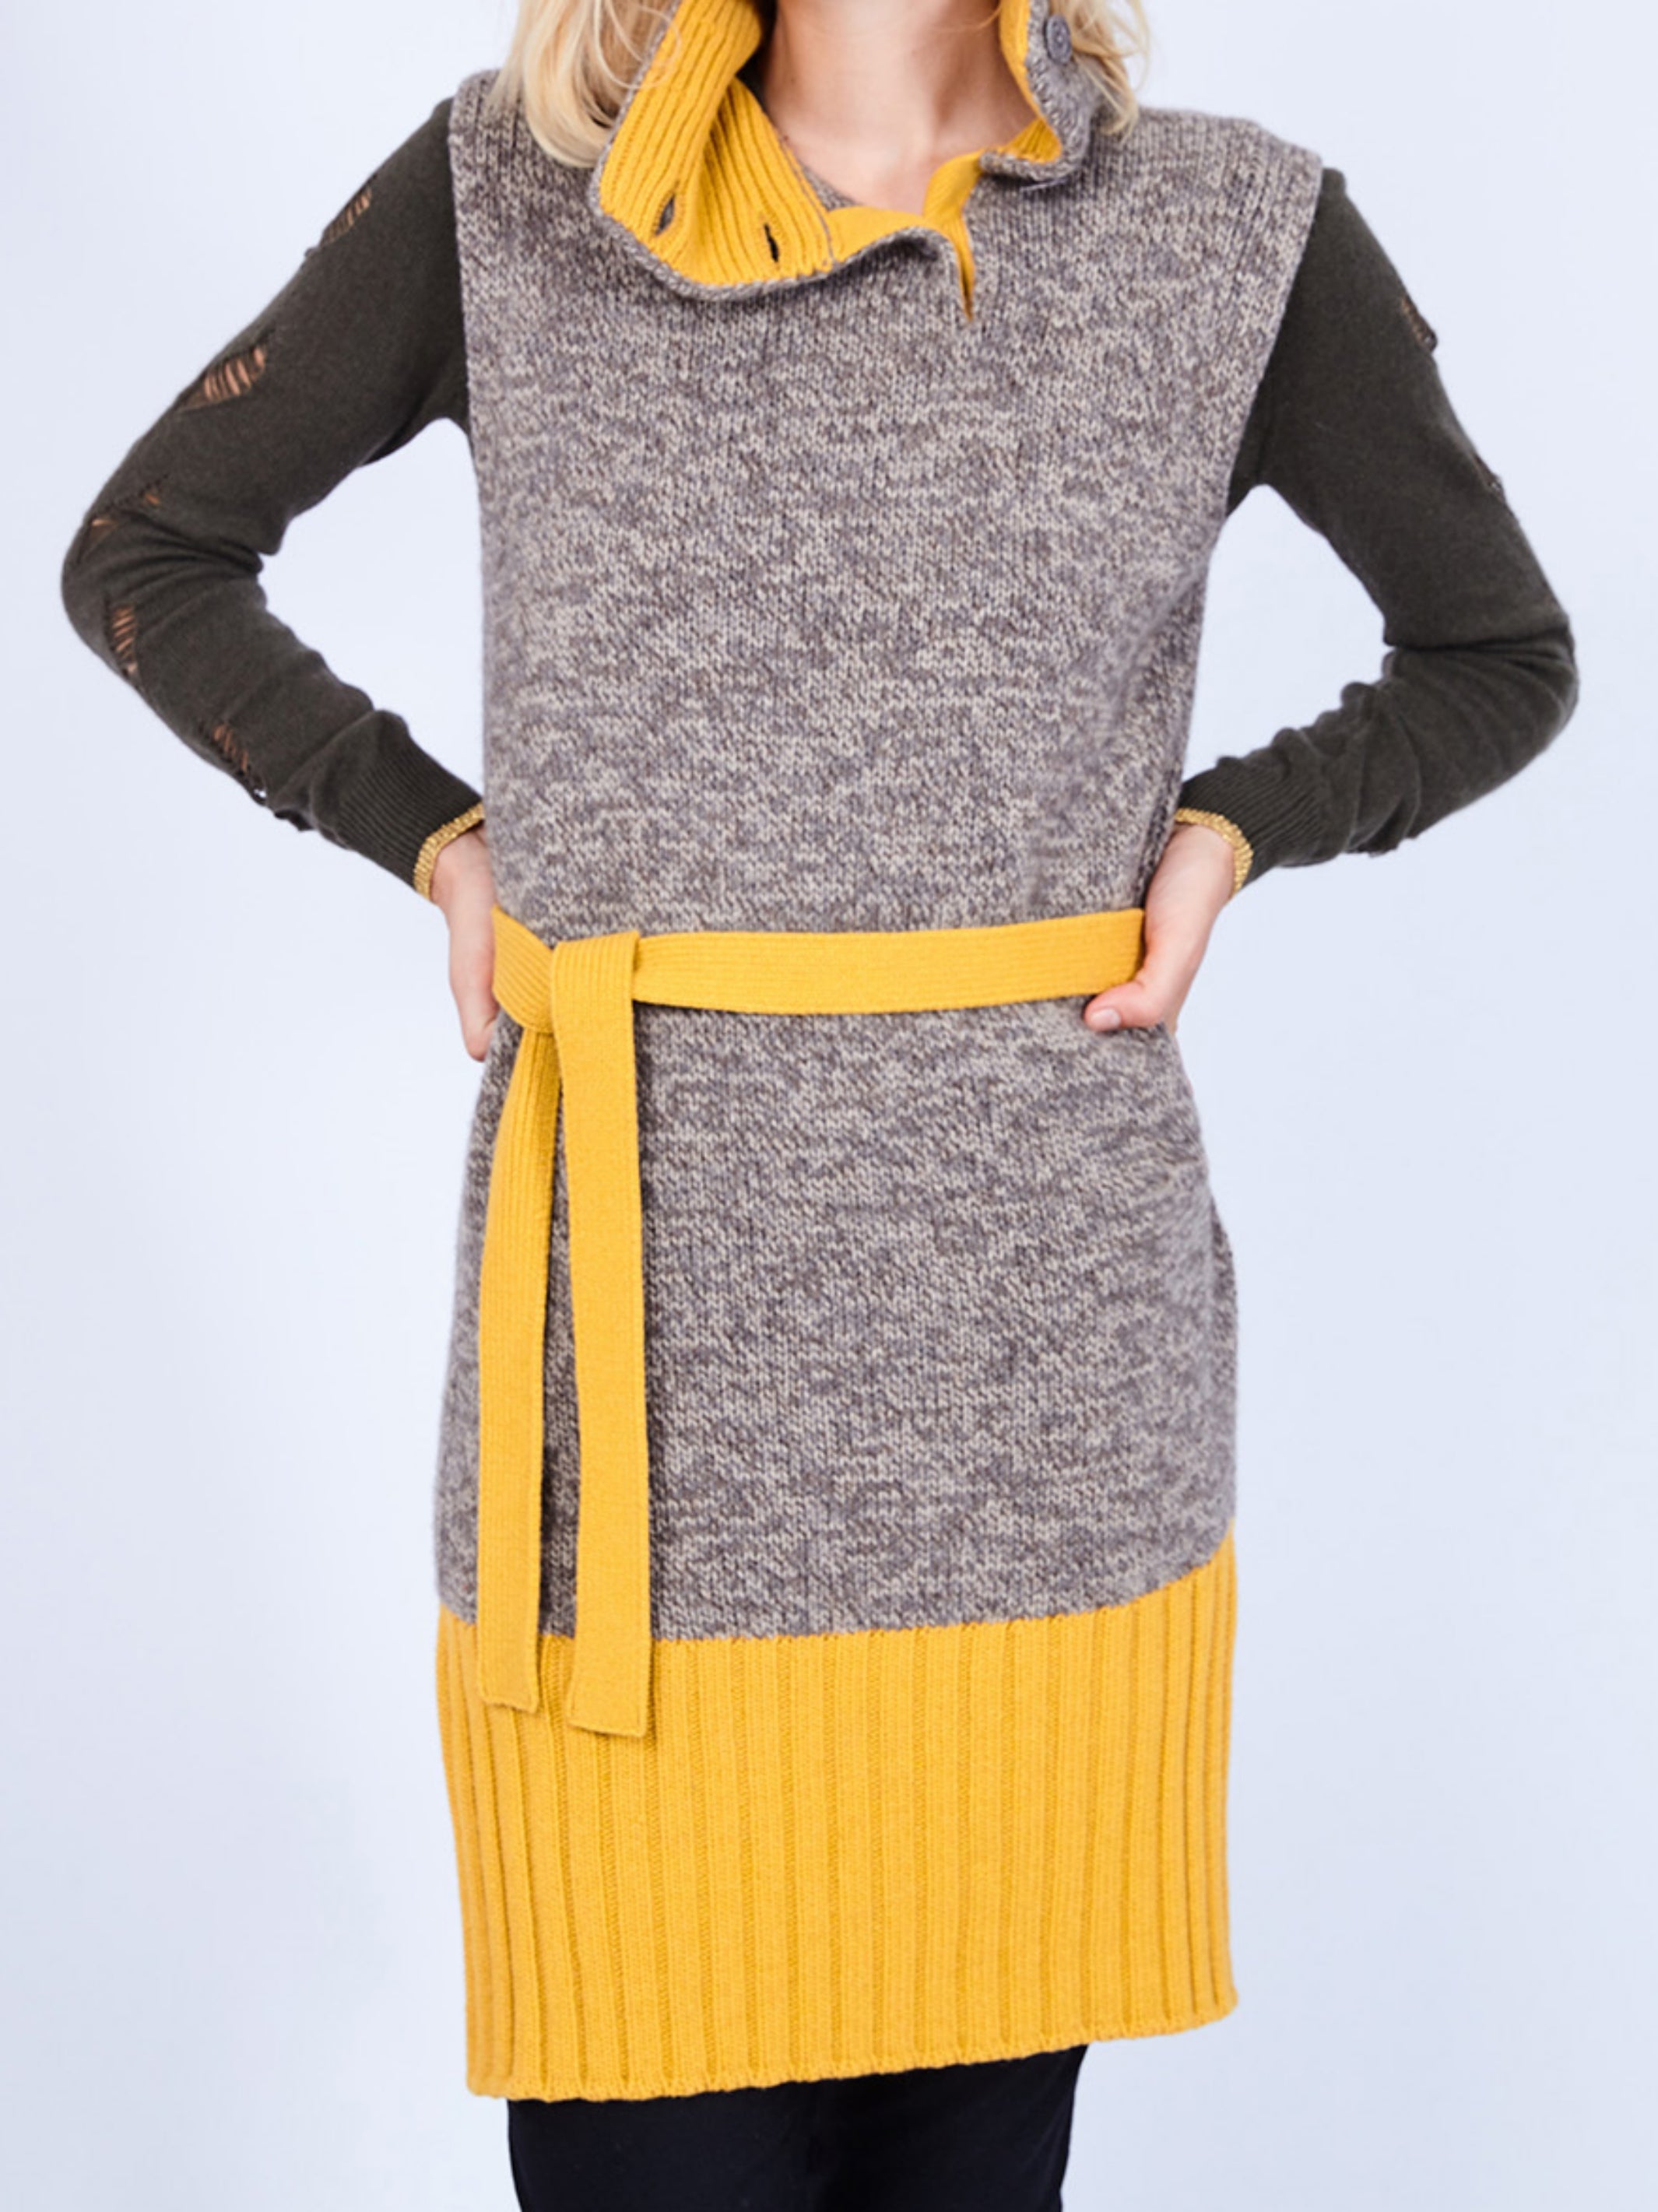 VITOS 1925 sweater dress in regenerated cashmere